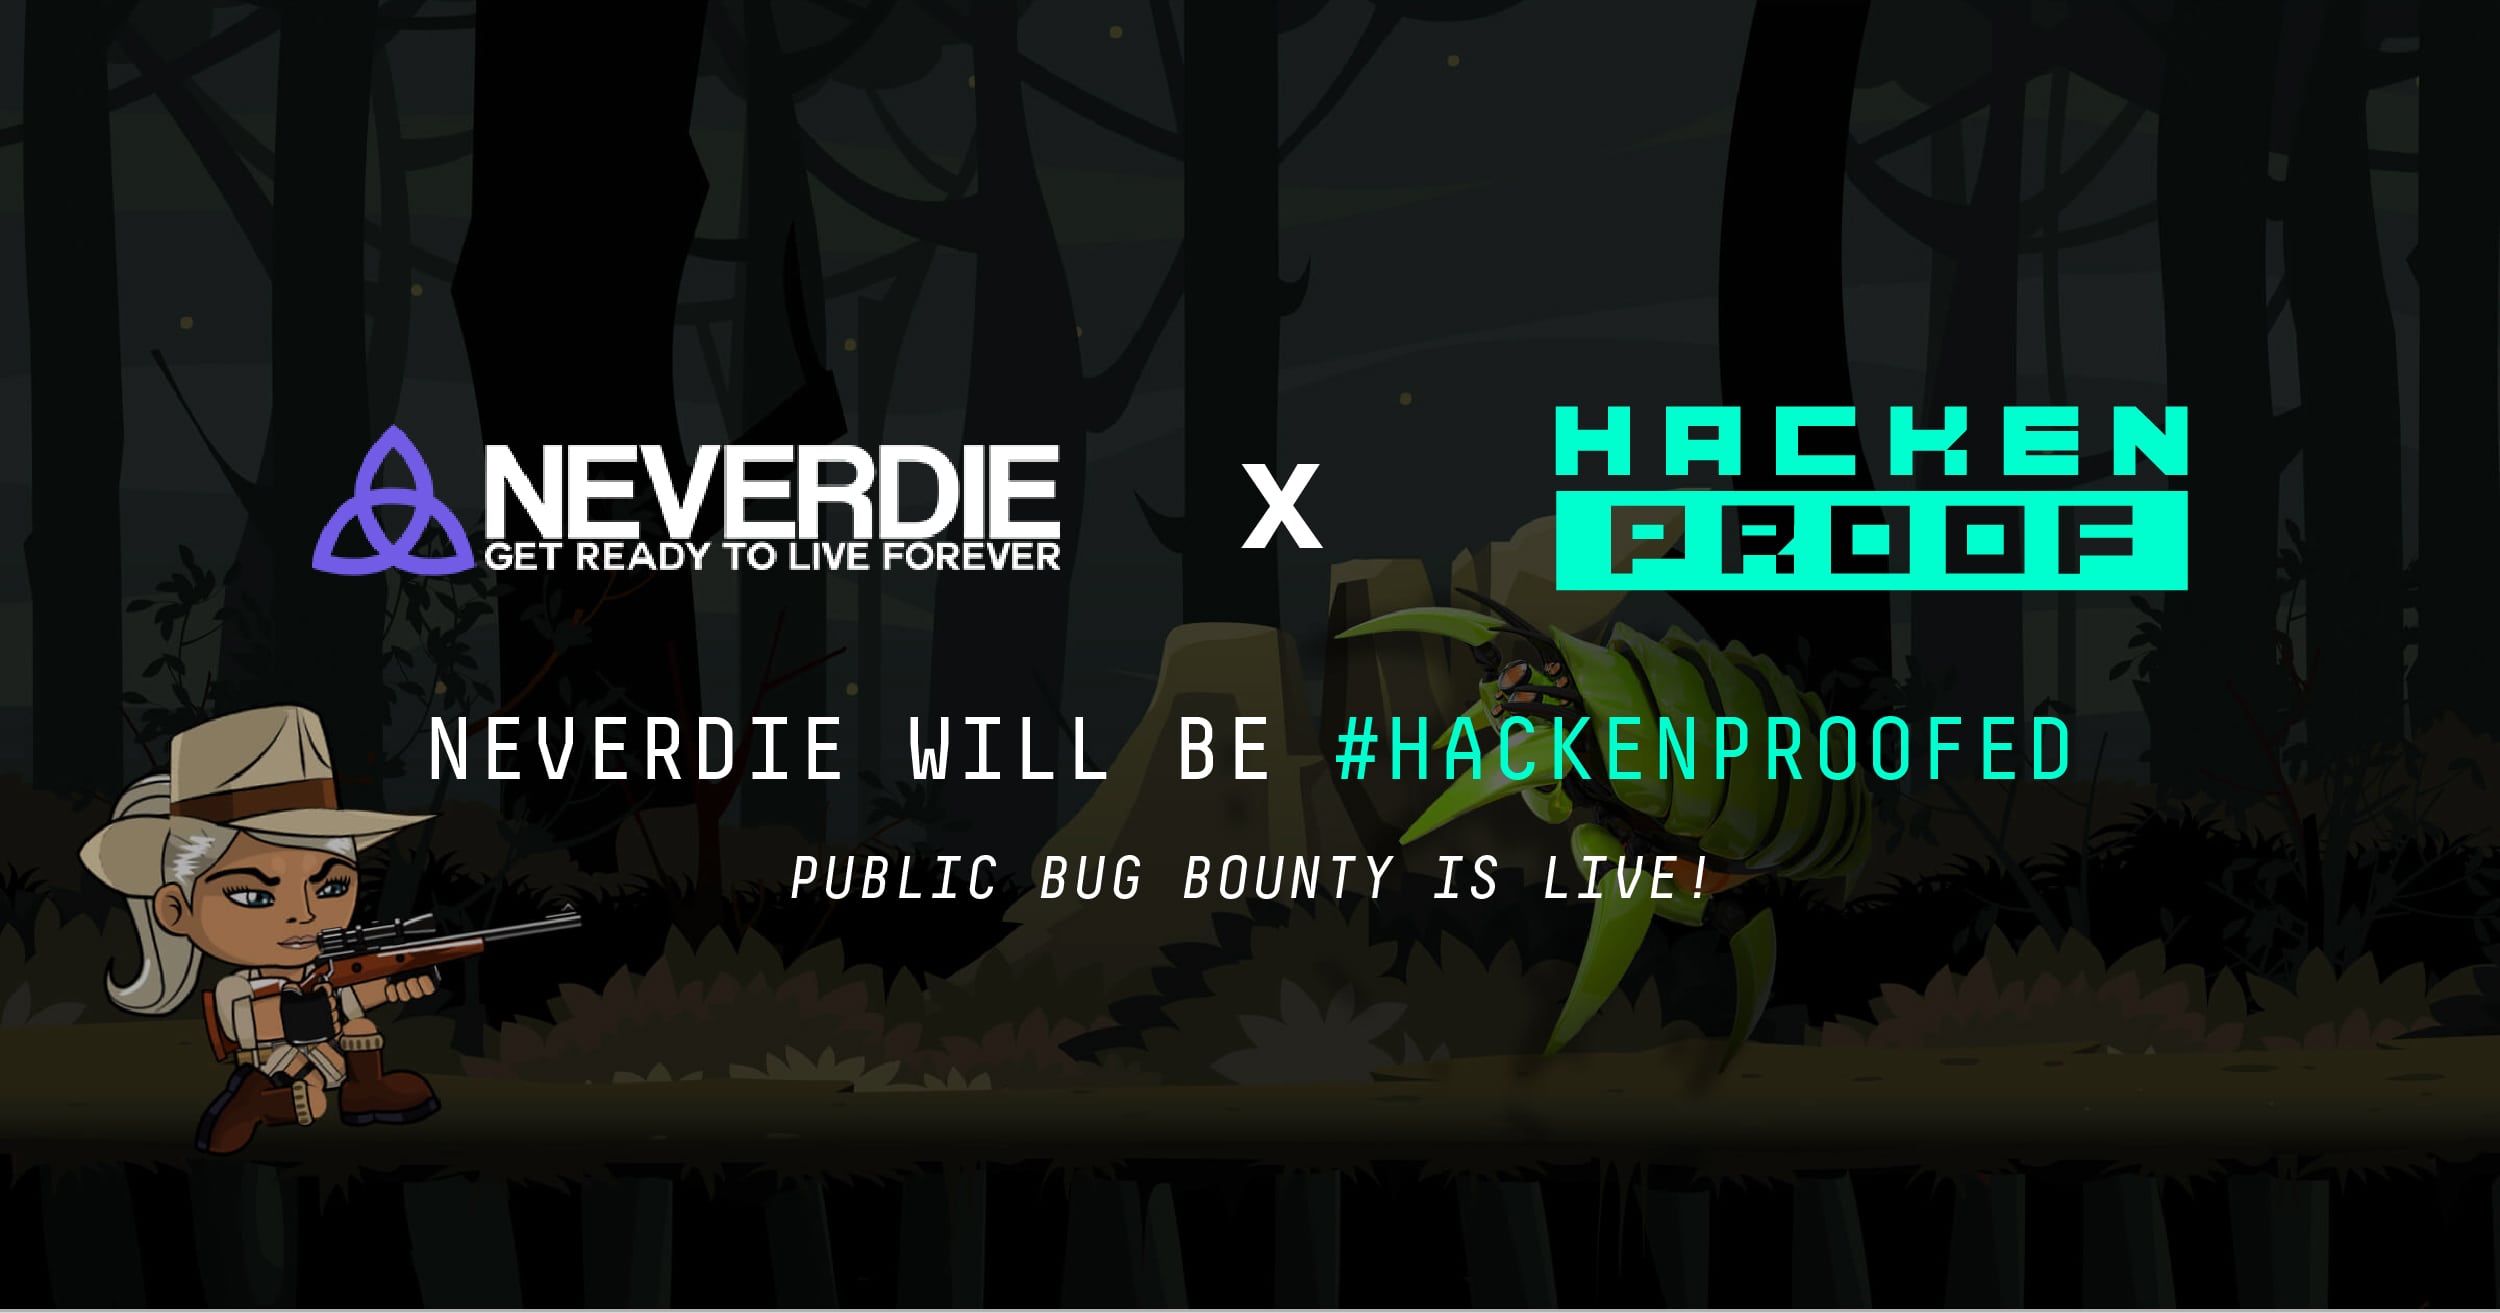 Neverdie Public Bug Bounty on HackenProof